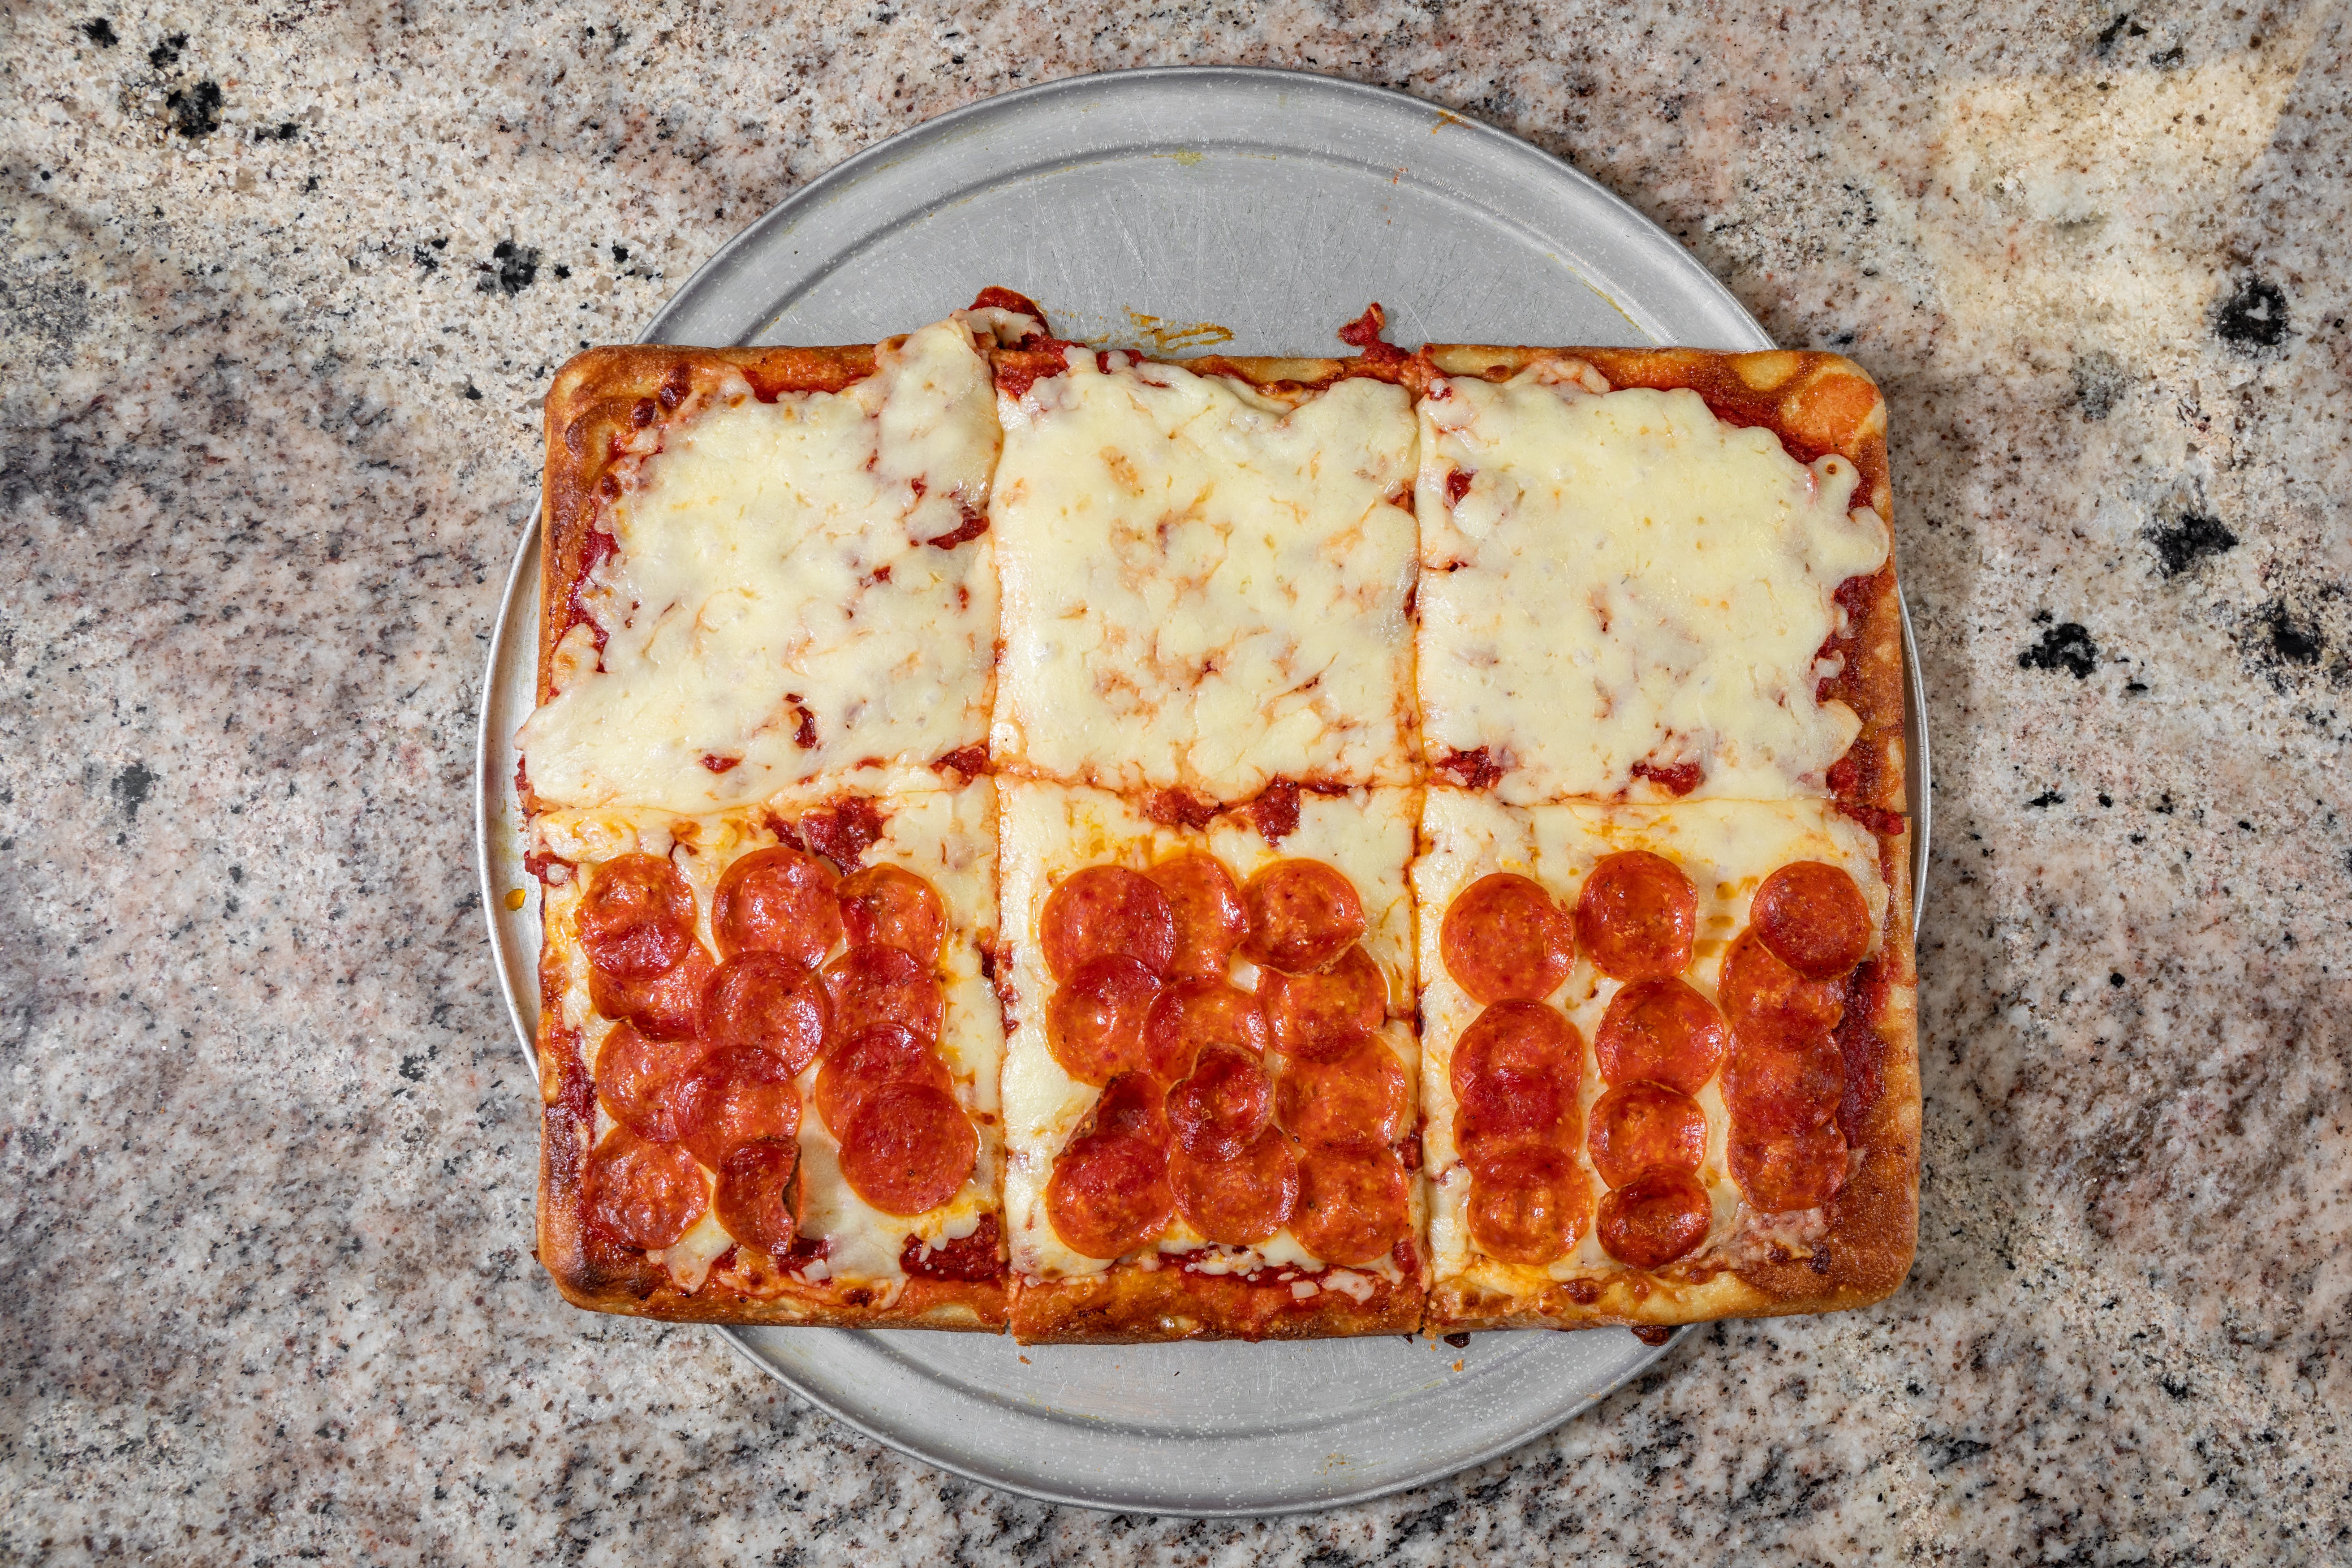 Sicilian Pizza: Italian or American? — Sal's Pizzeria